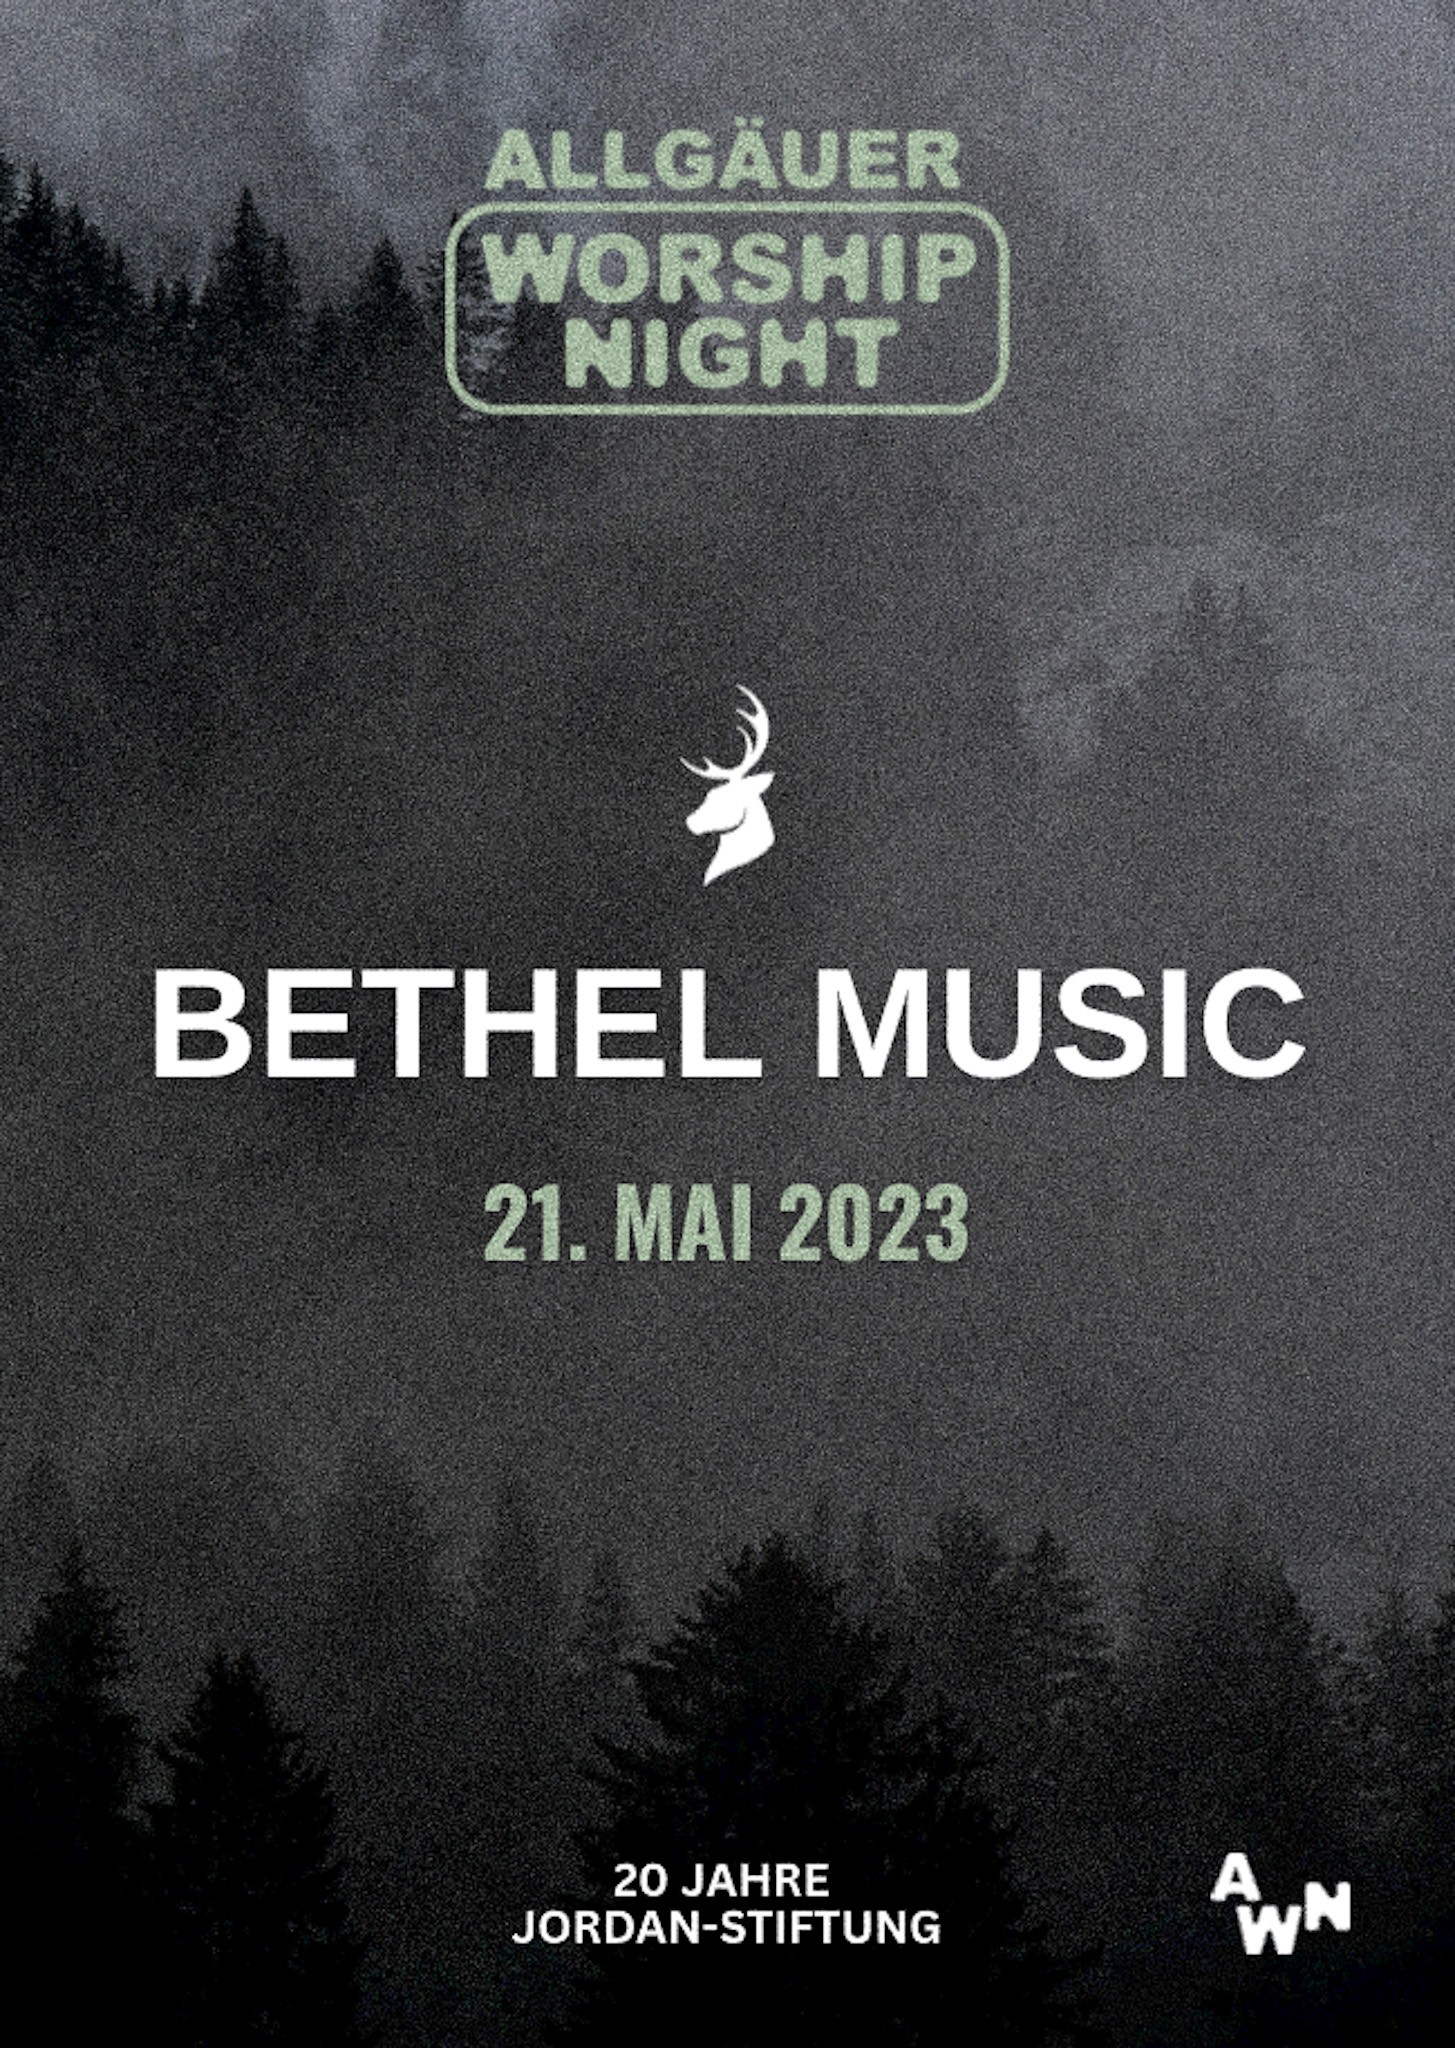 Bethel Music - Allgäuer Worship Night